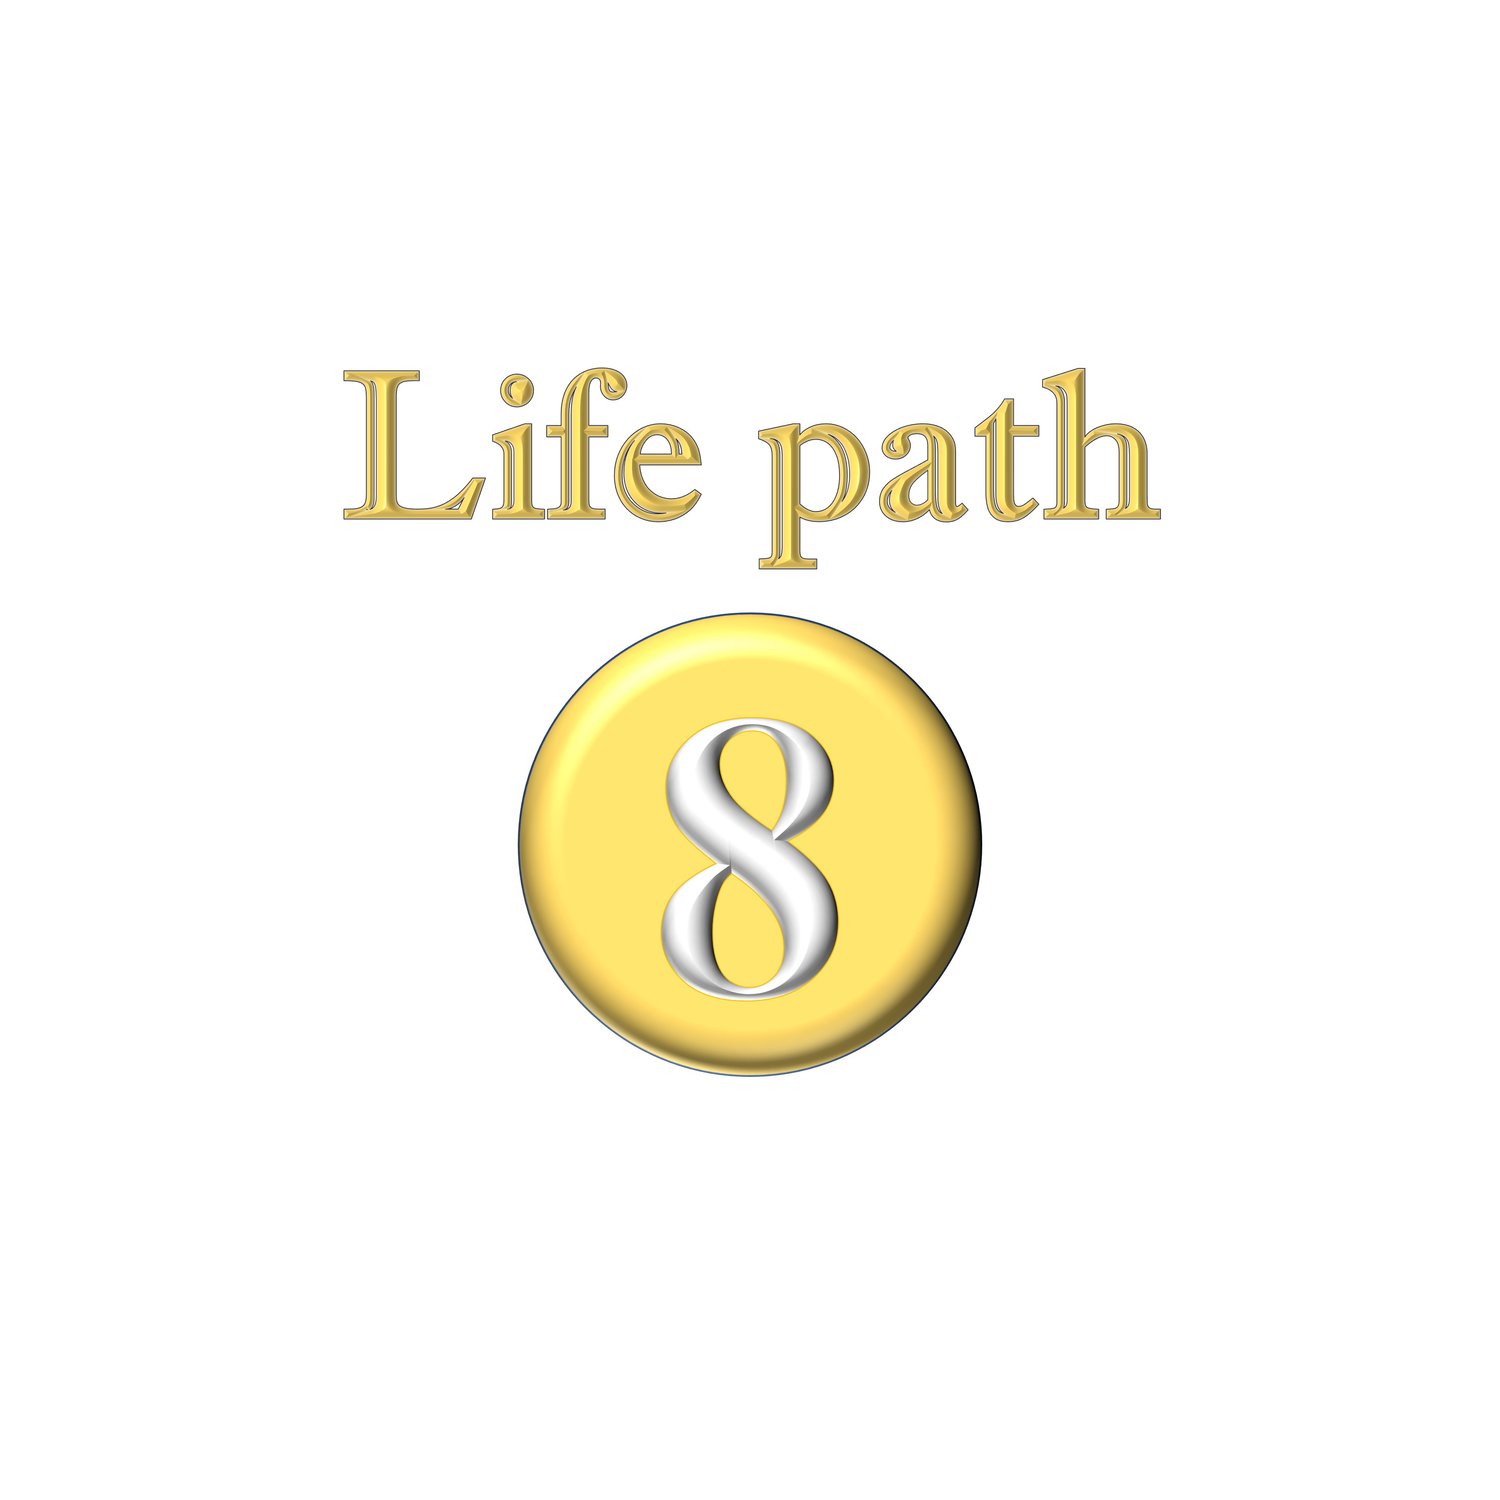 Life path 8